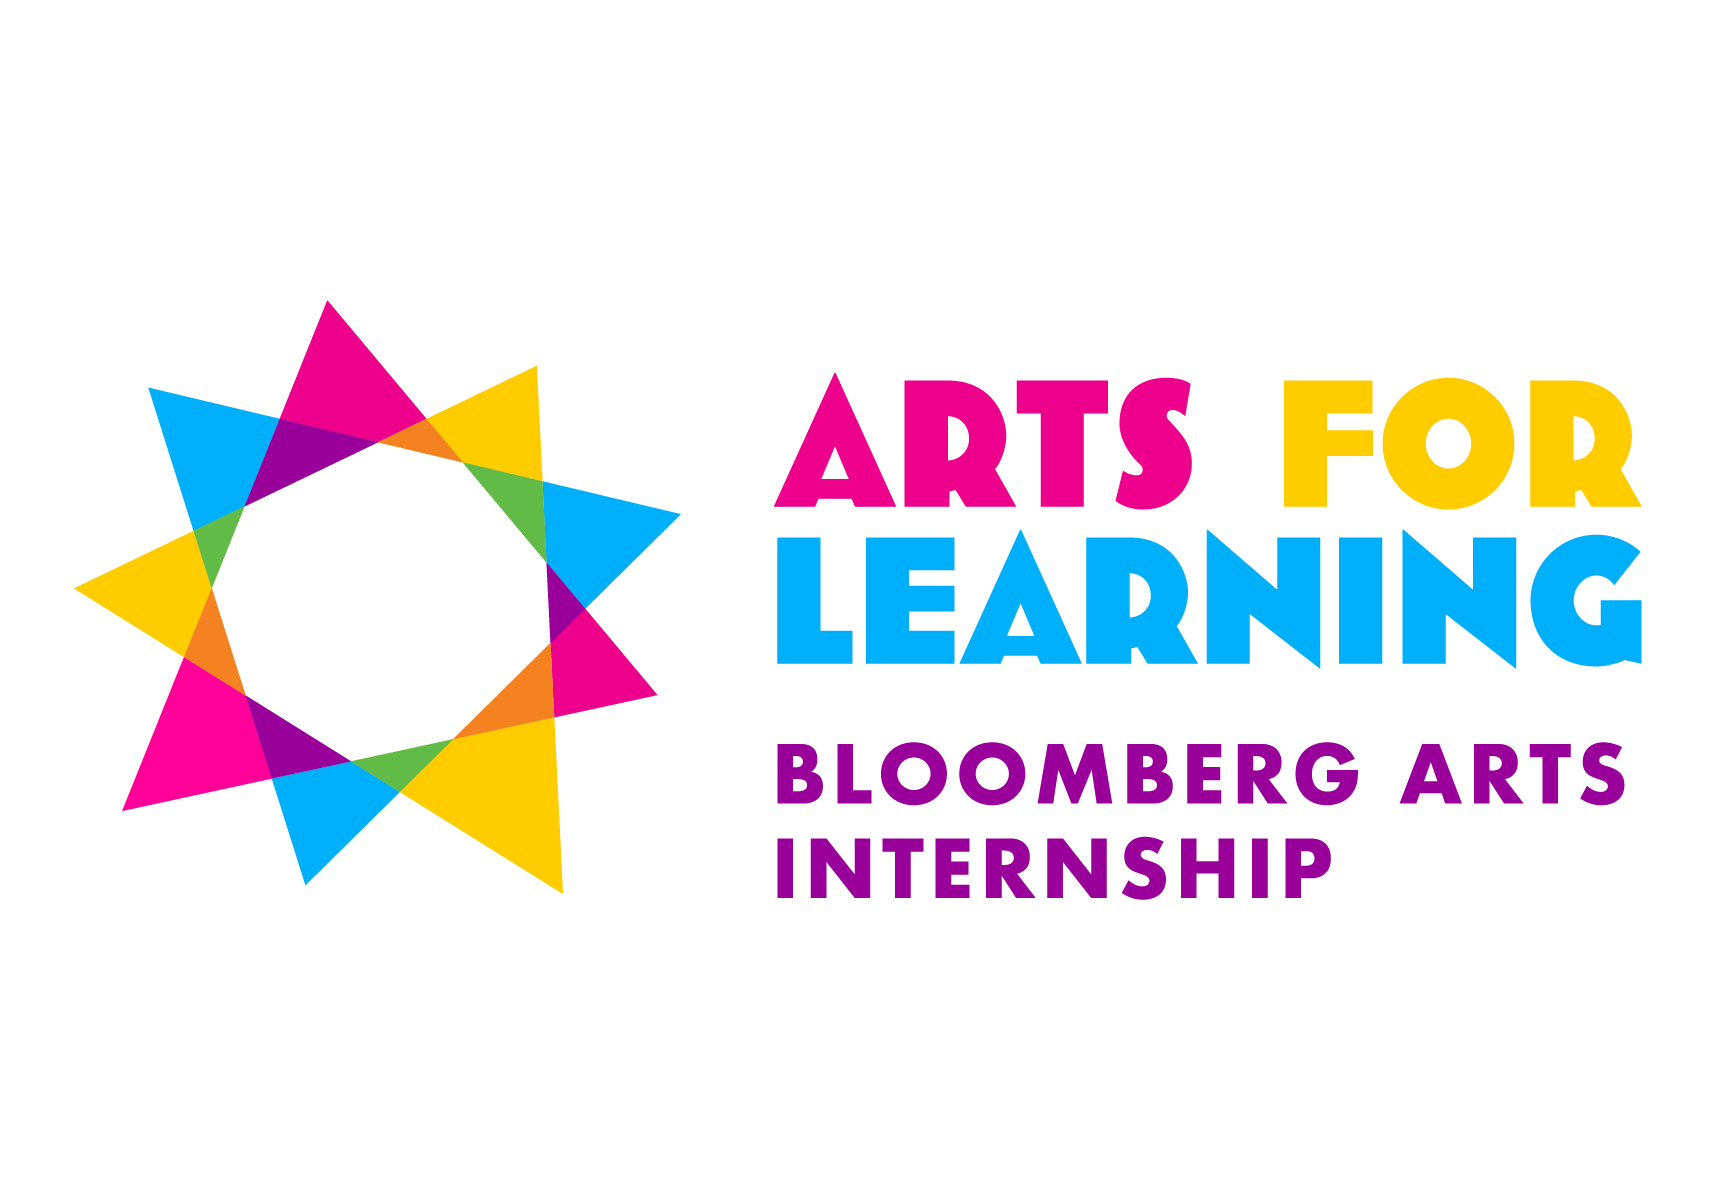 Arts for Learning Bloomberg Arts Internship